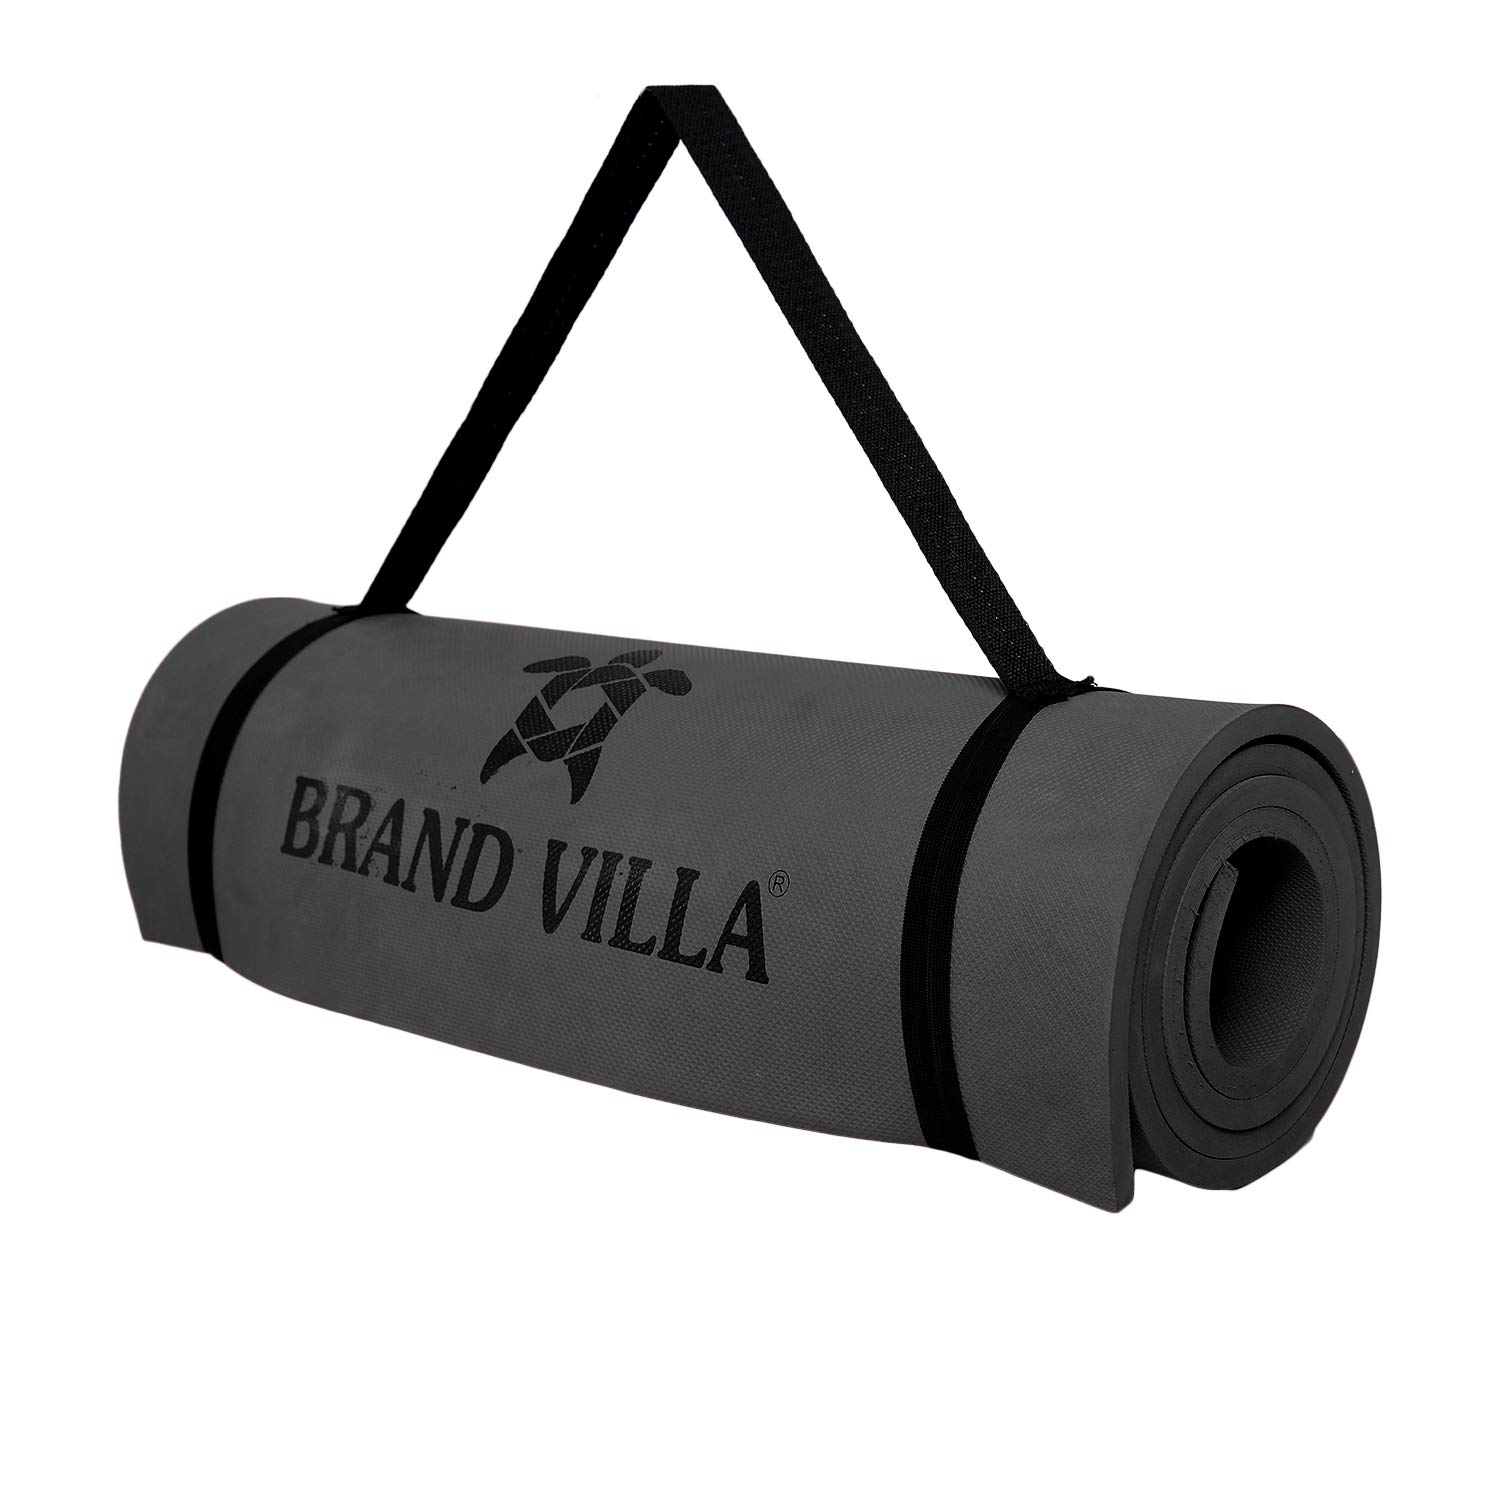 brandvilla Yoga Mat with Carrying Bag